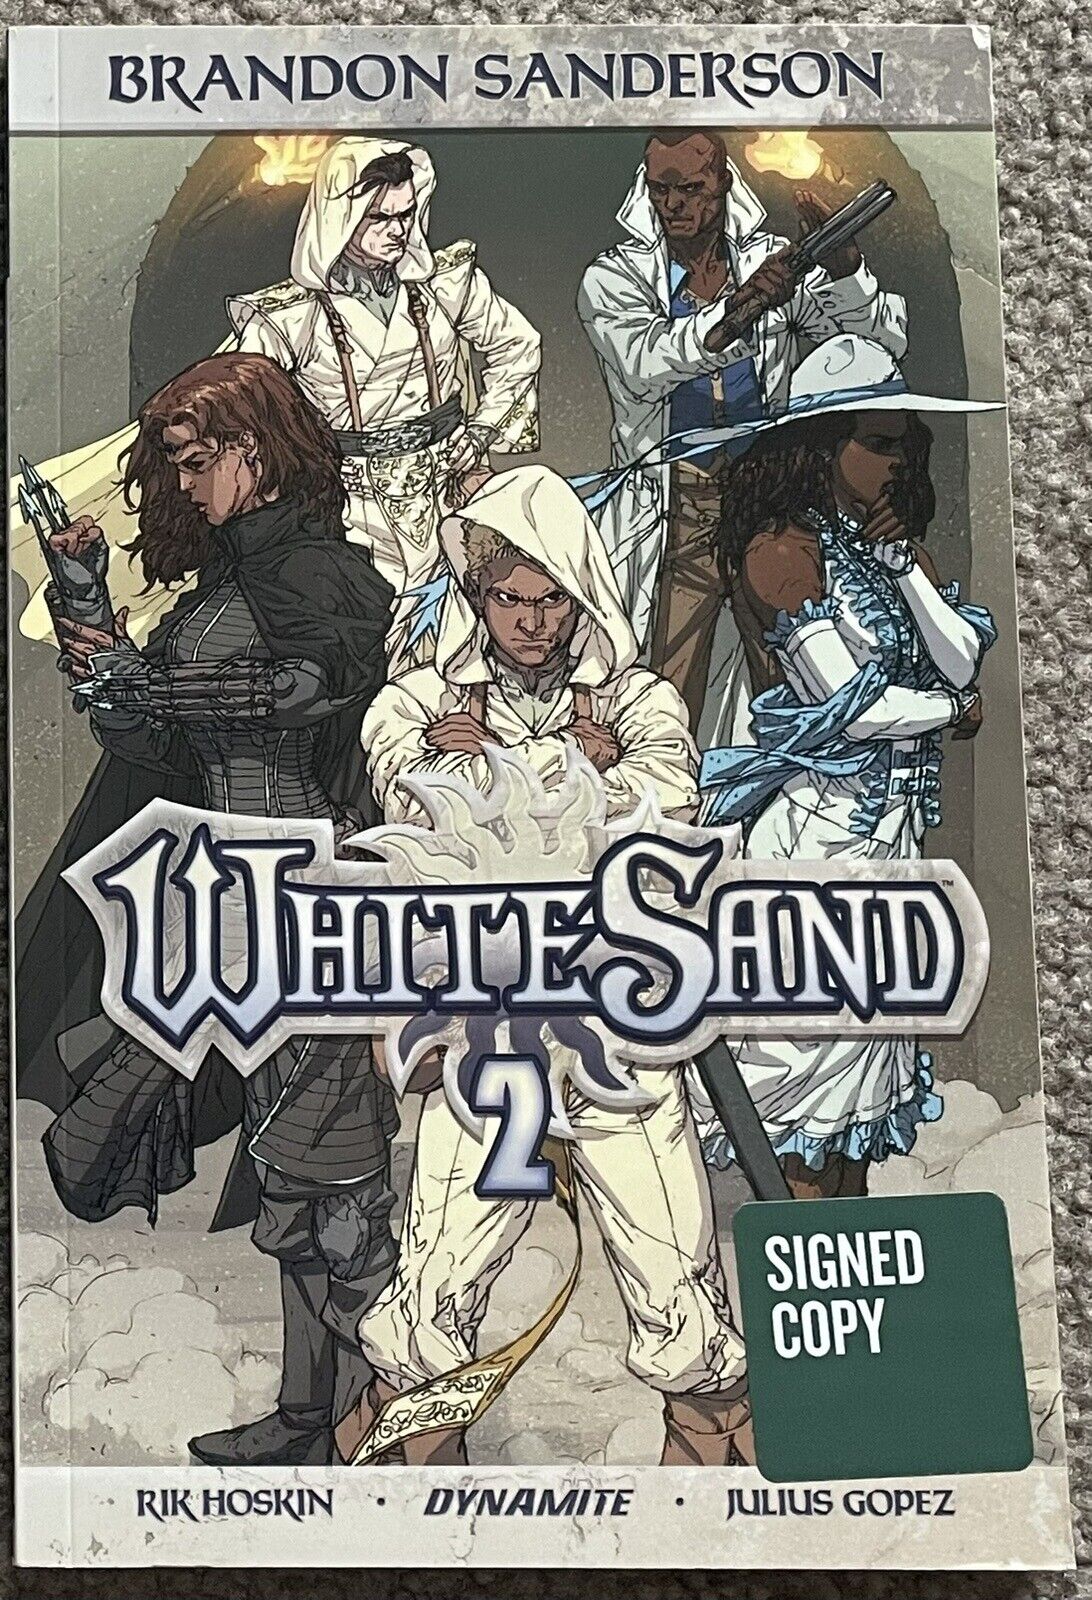 SIGNED ⚡️ WHITE SAND VOLUME 2 by Brandon Sanderson Autographed Auto Signature